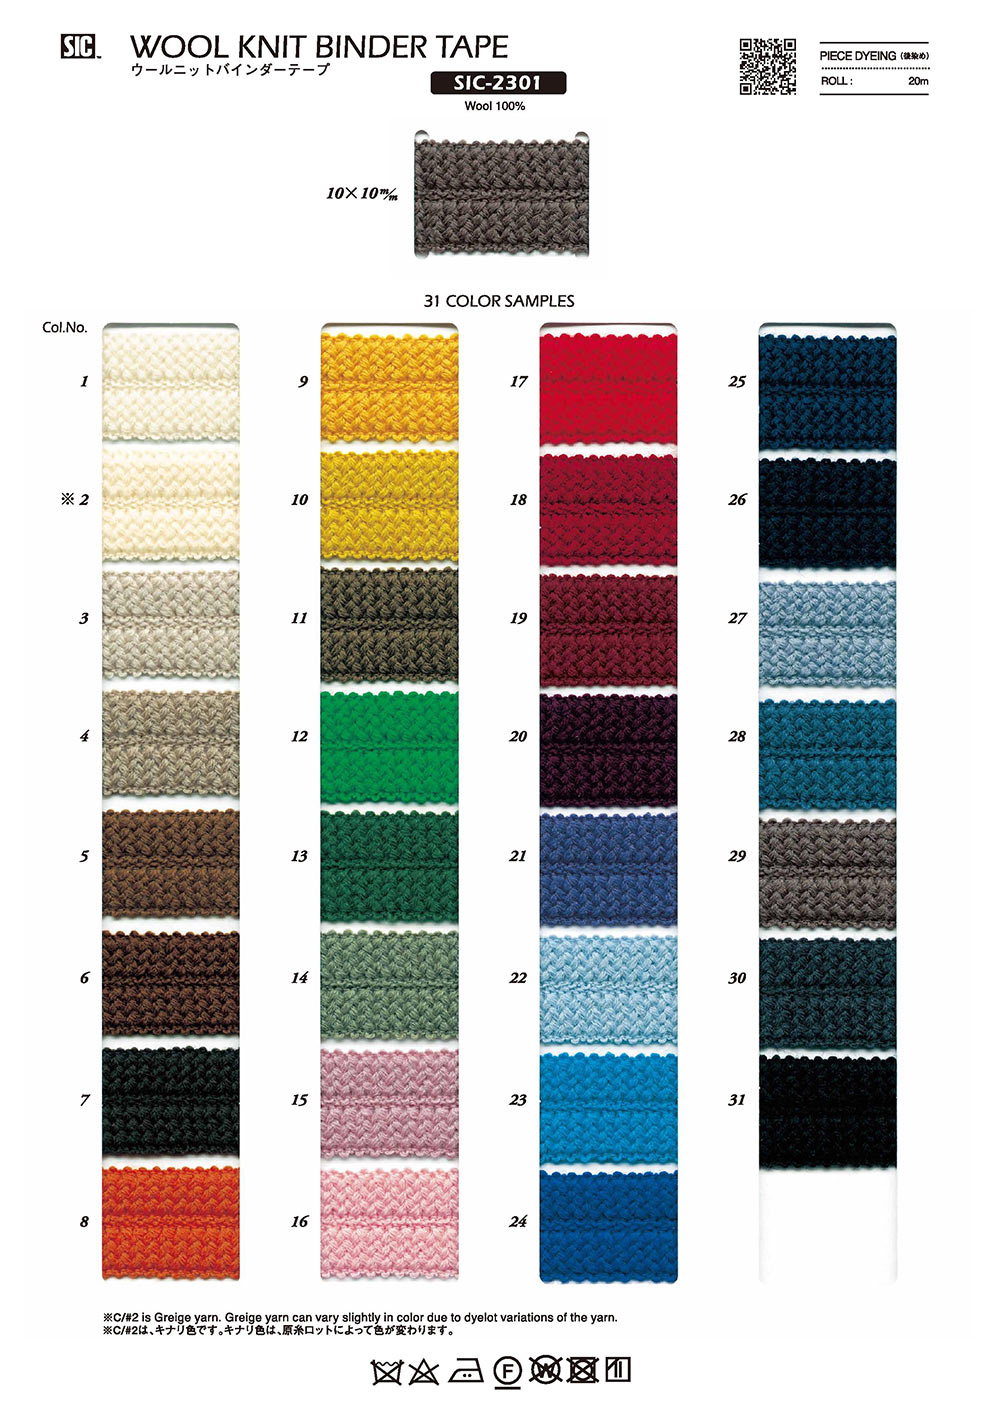 SIC-2301 Wool Knit Binder Tape[Ribbon Tape Cord] SHINDO(SIC)